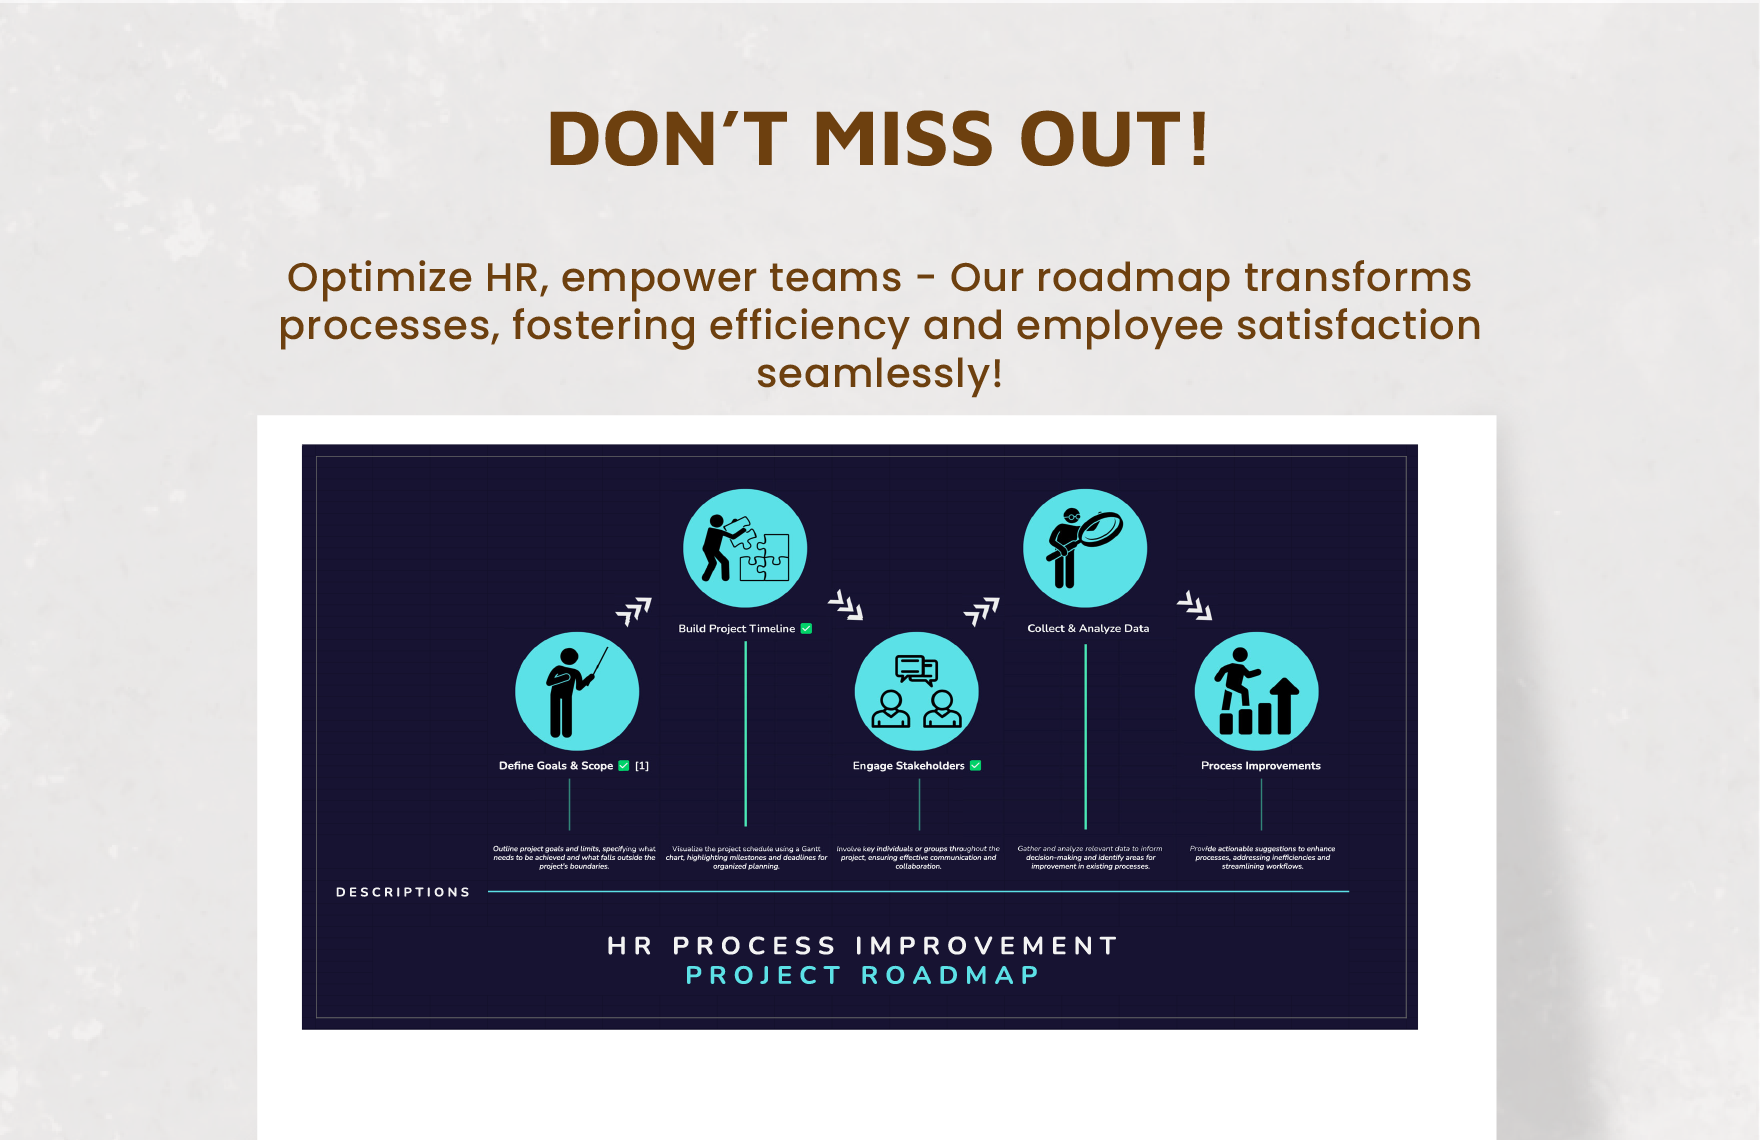 HR Process Improvement Project Roadmap Template